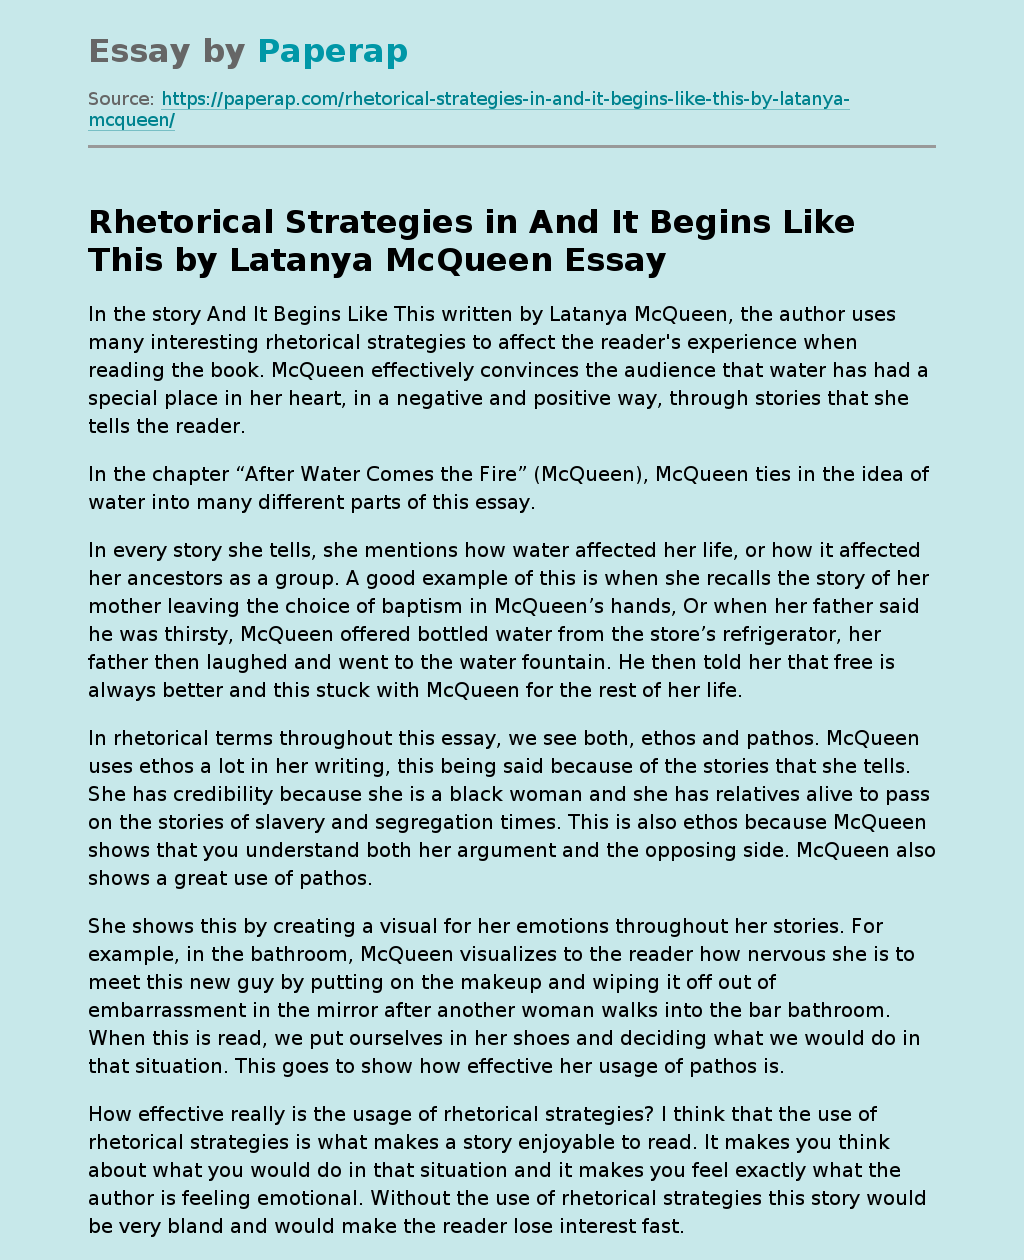 Rhetorical Strategies in And It Begins Like This by Latanya McQueen